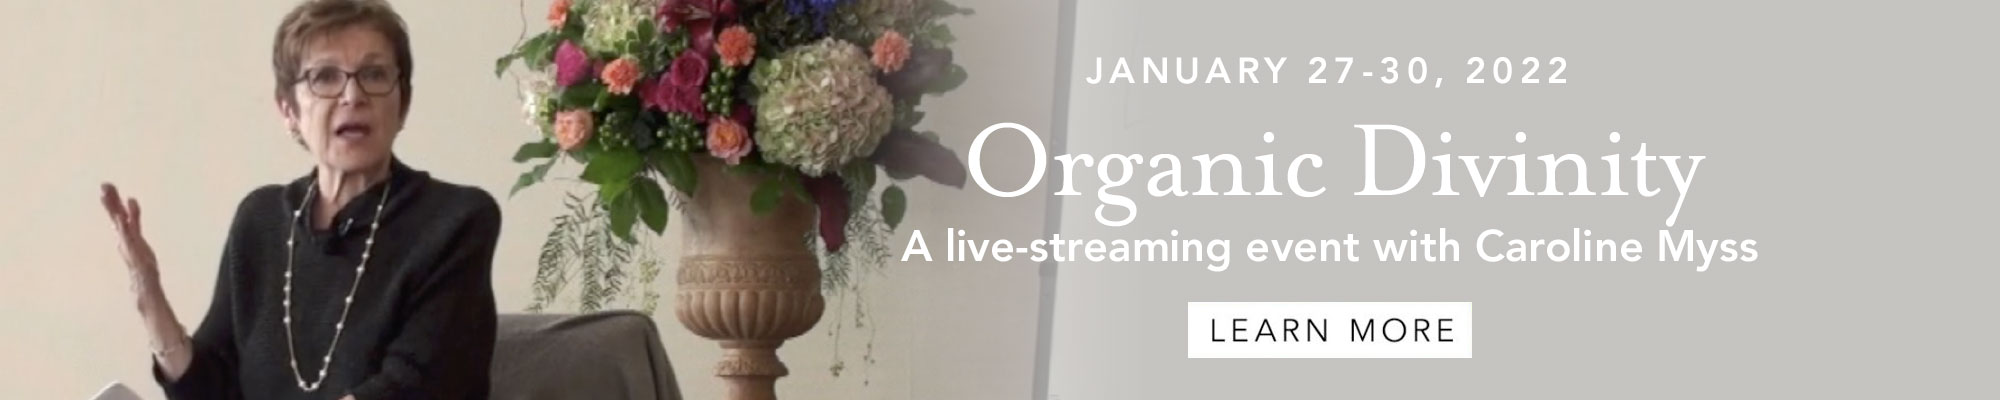 Organic Divinity - A live streaming event with Caroline Myss